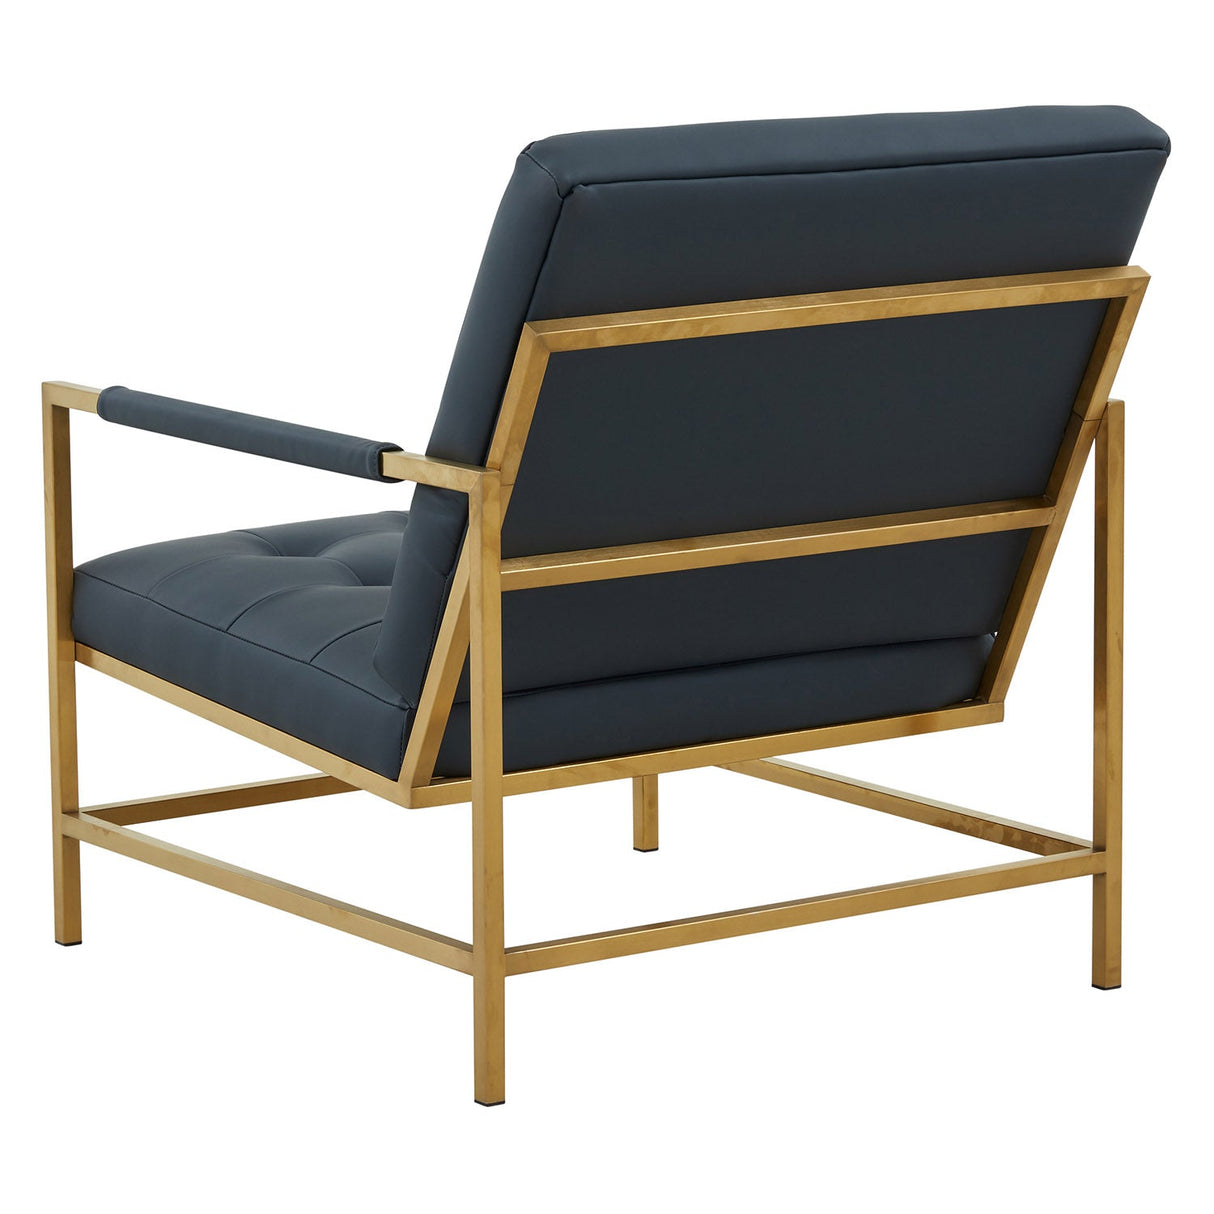 Tov Furniture Van Vegan Leather Accent Chair